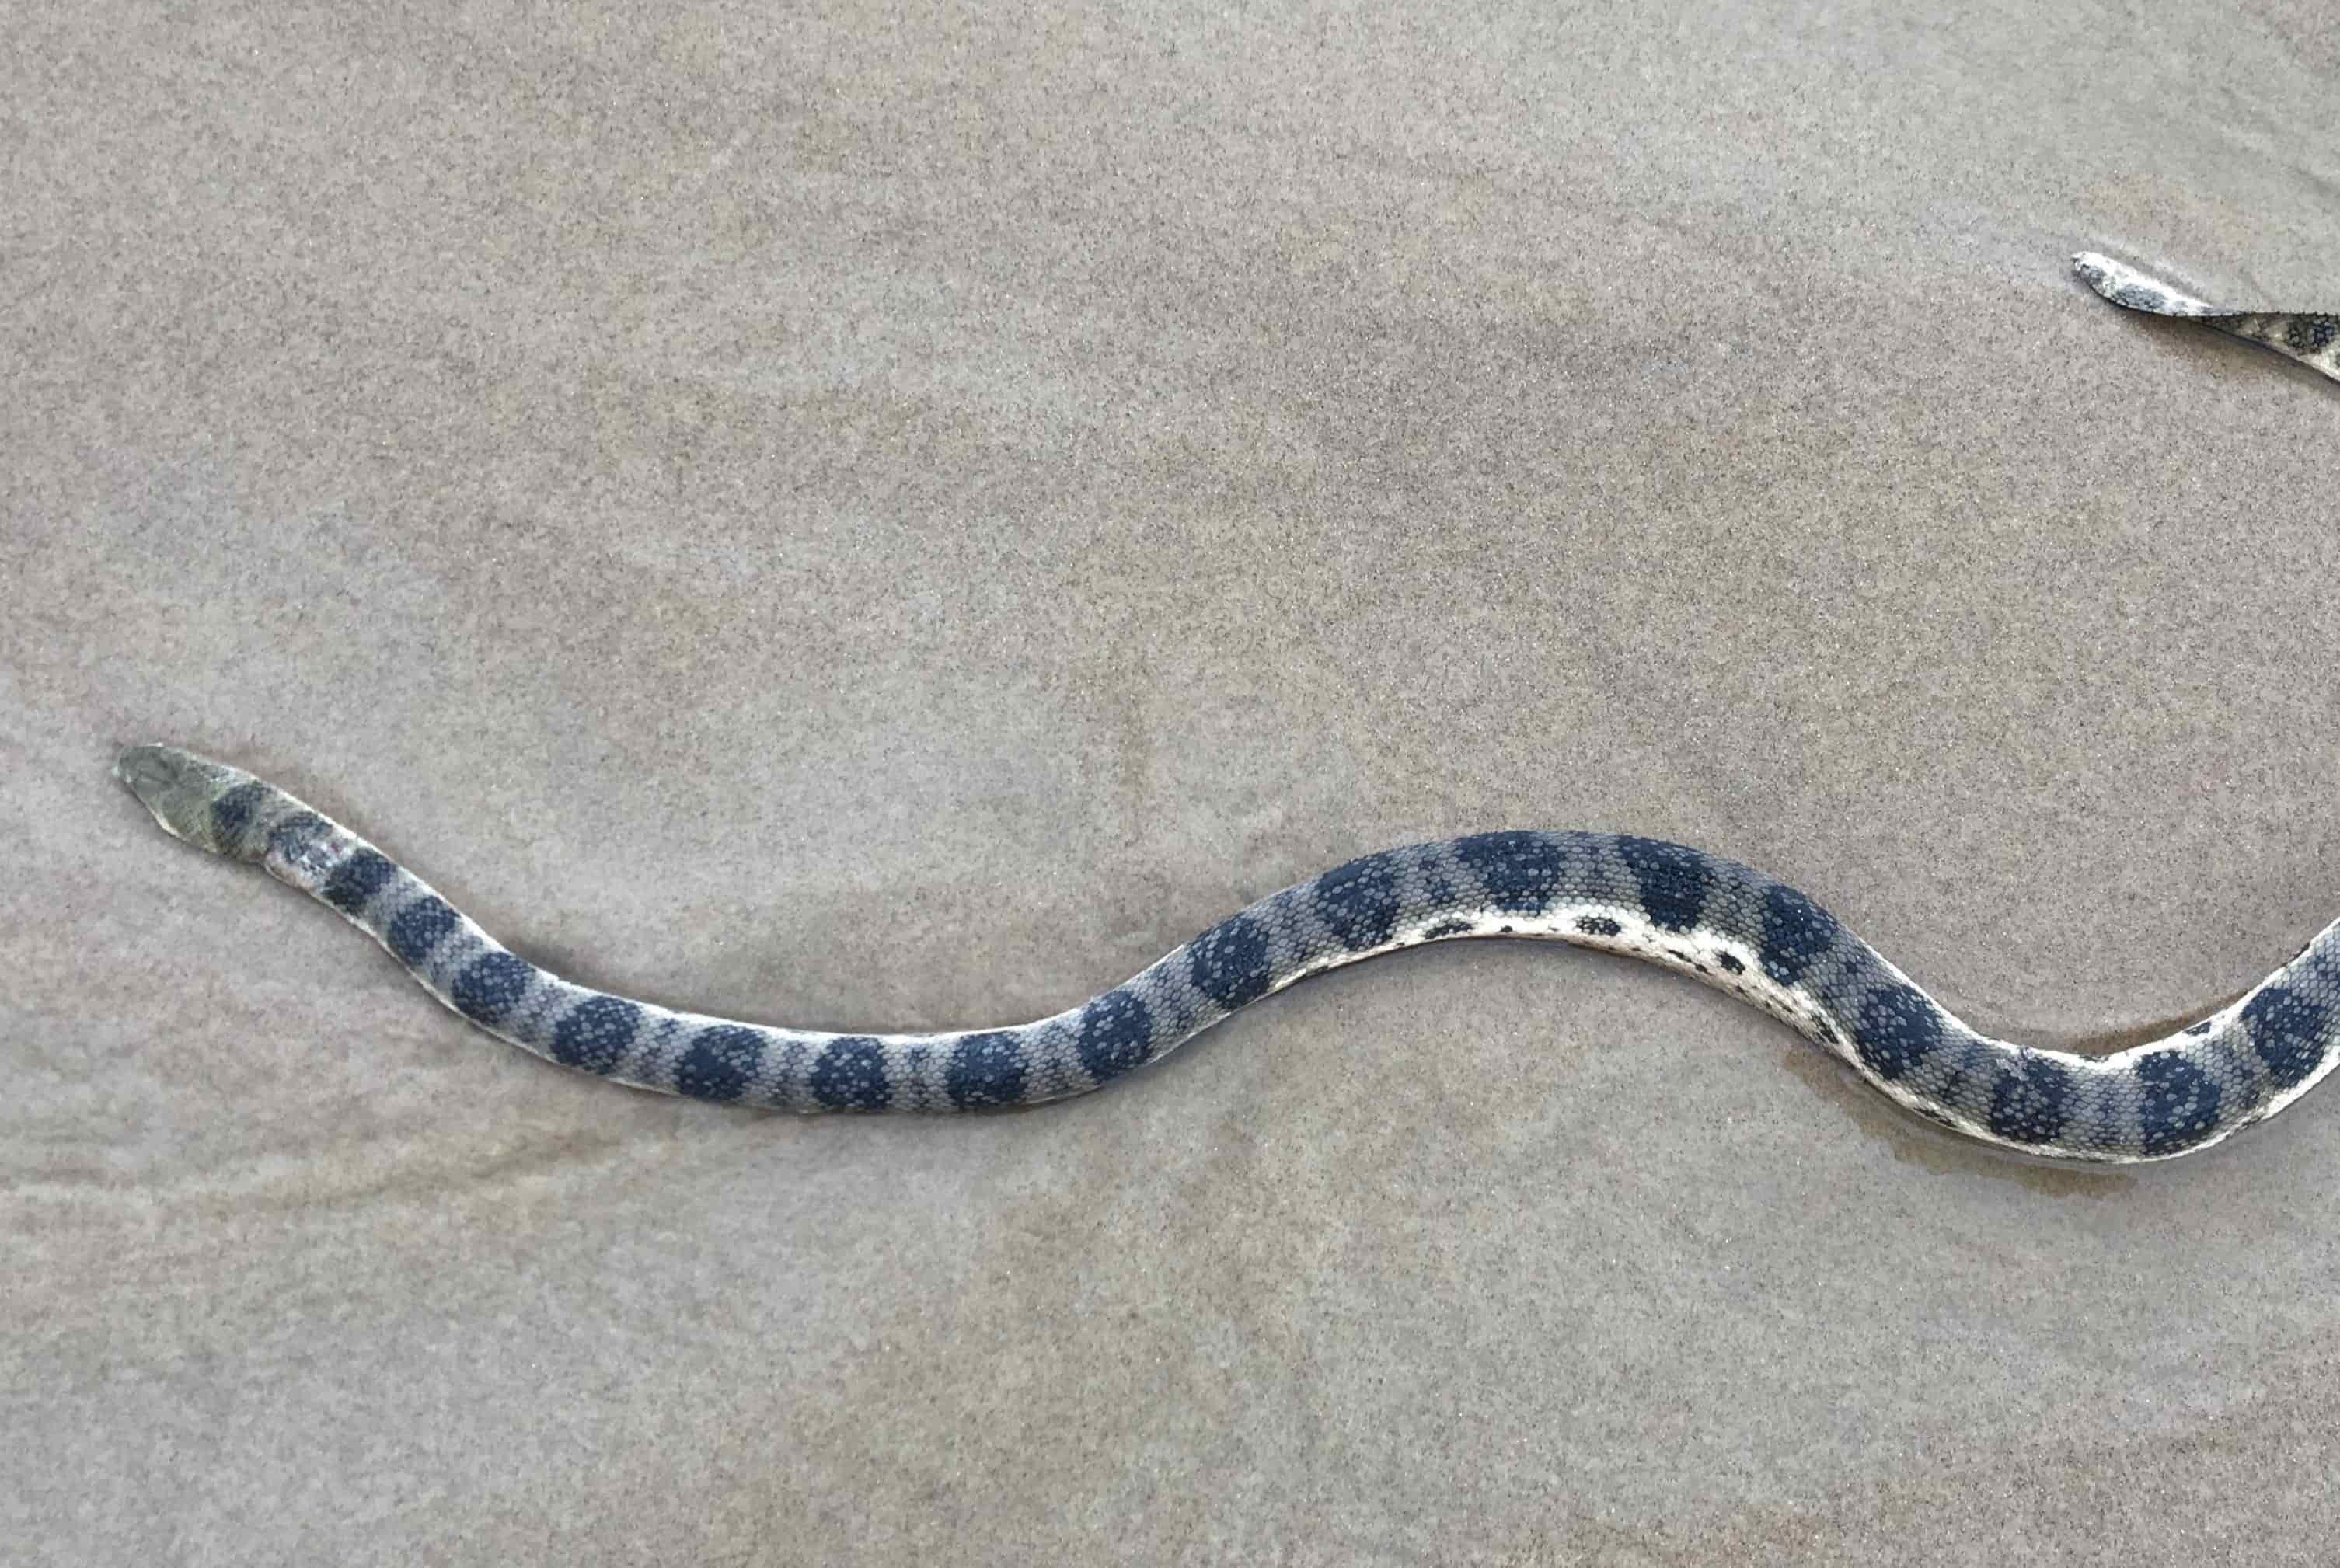 Asian pipe snakes - Encyclopedia of Life